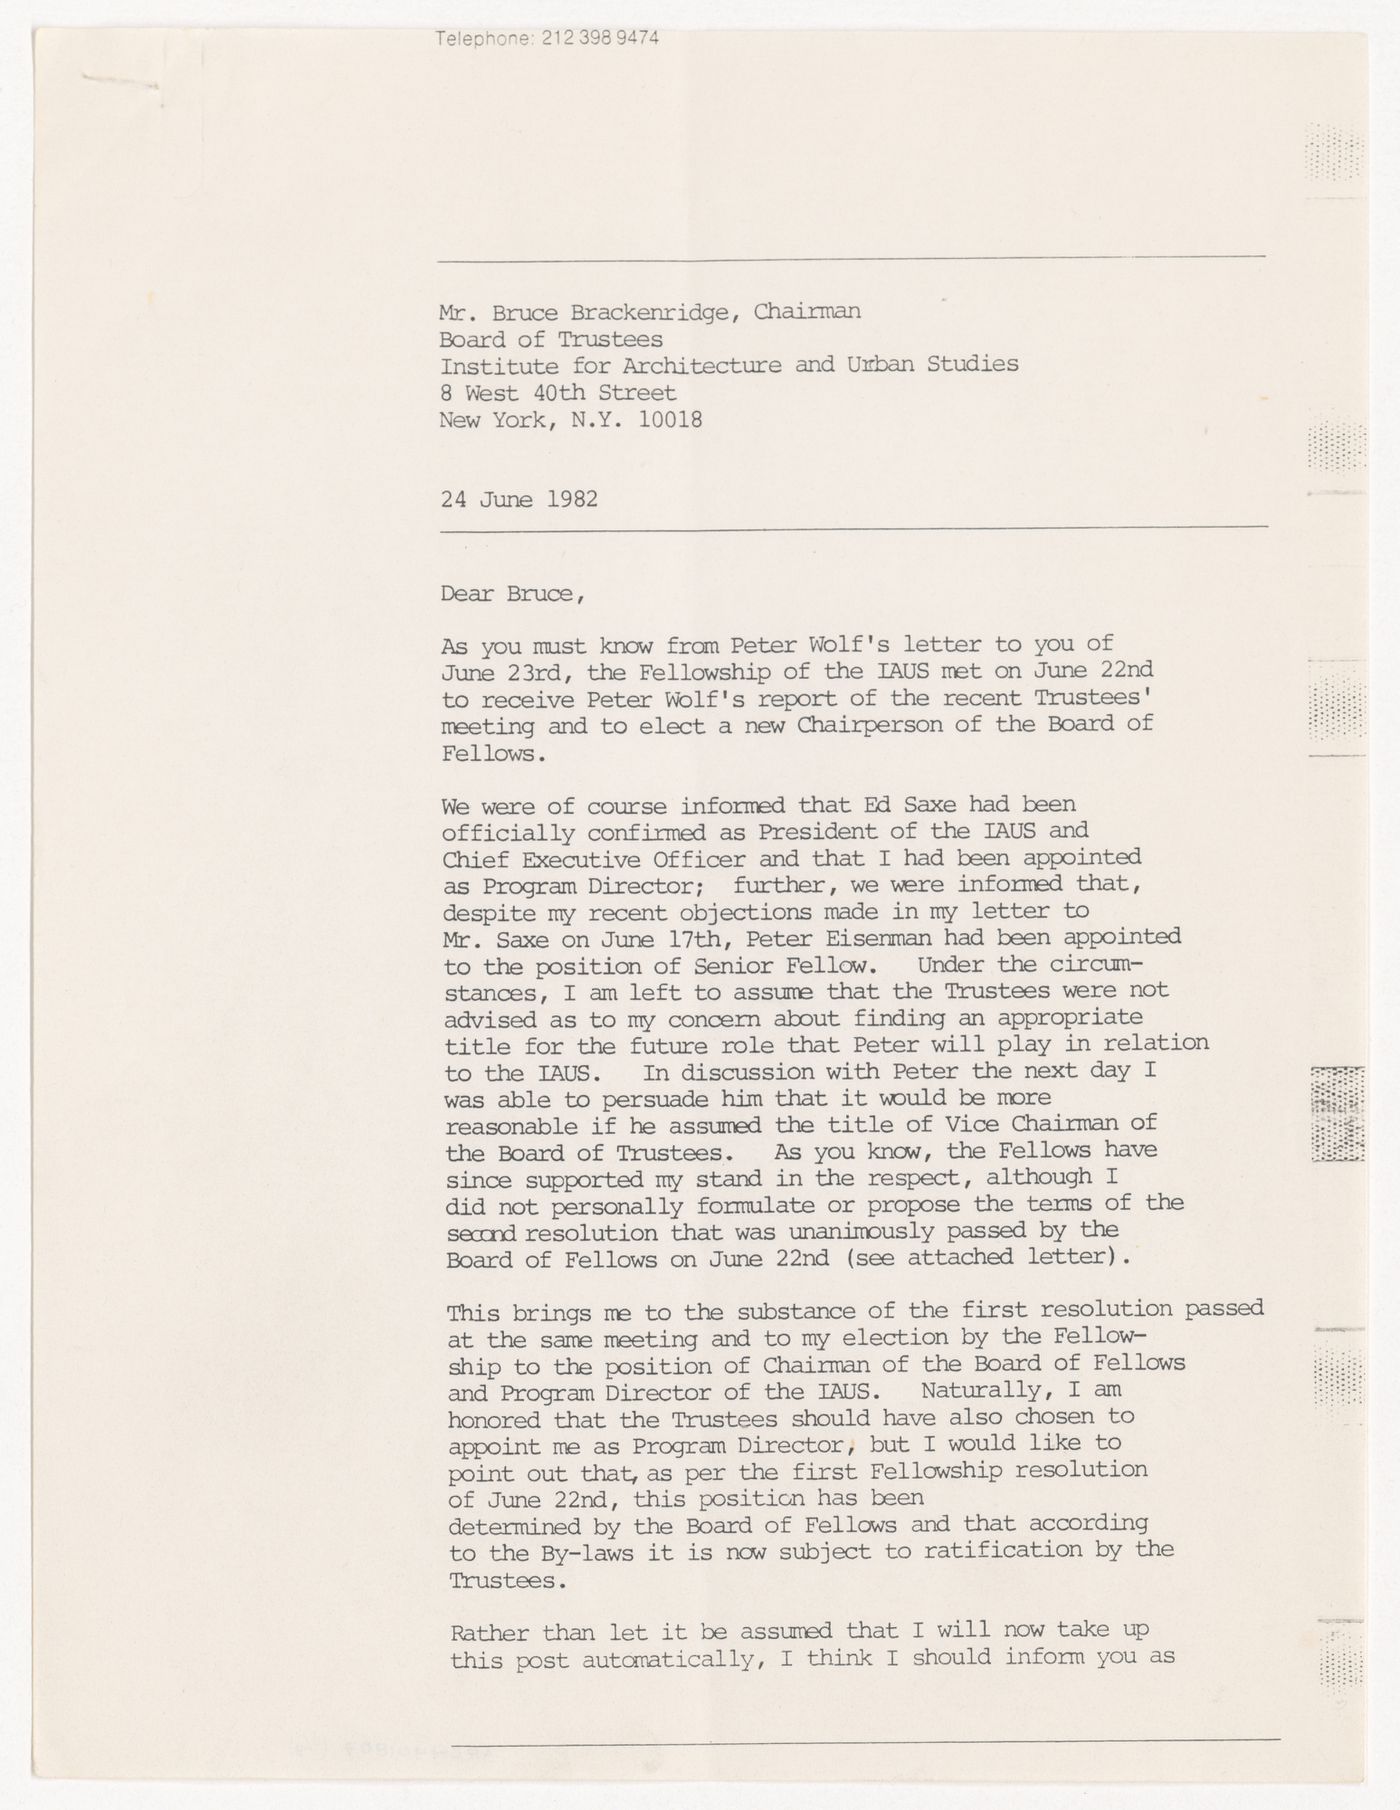 Memorandum from Kenneth Frampton to Bruce Brackenridge about Frampton assuming the position of Program Director